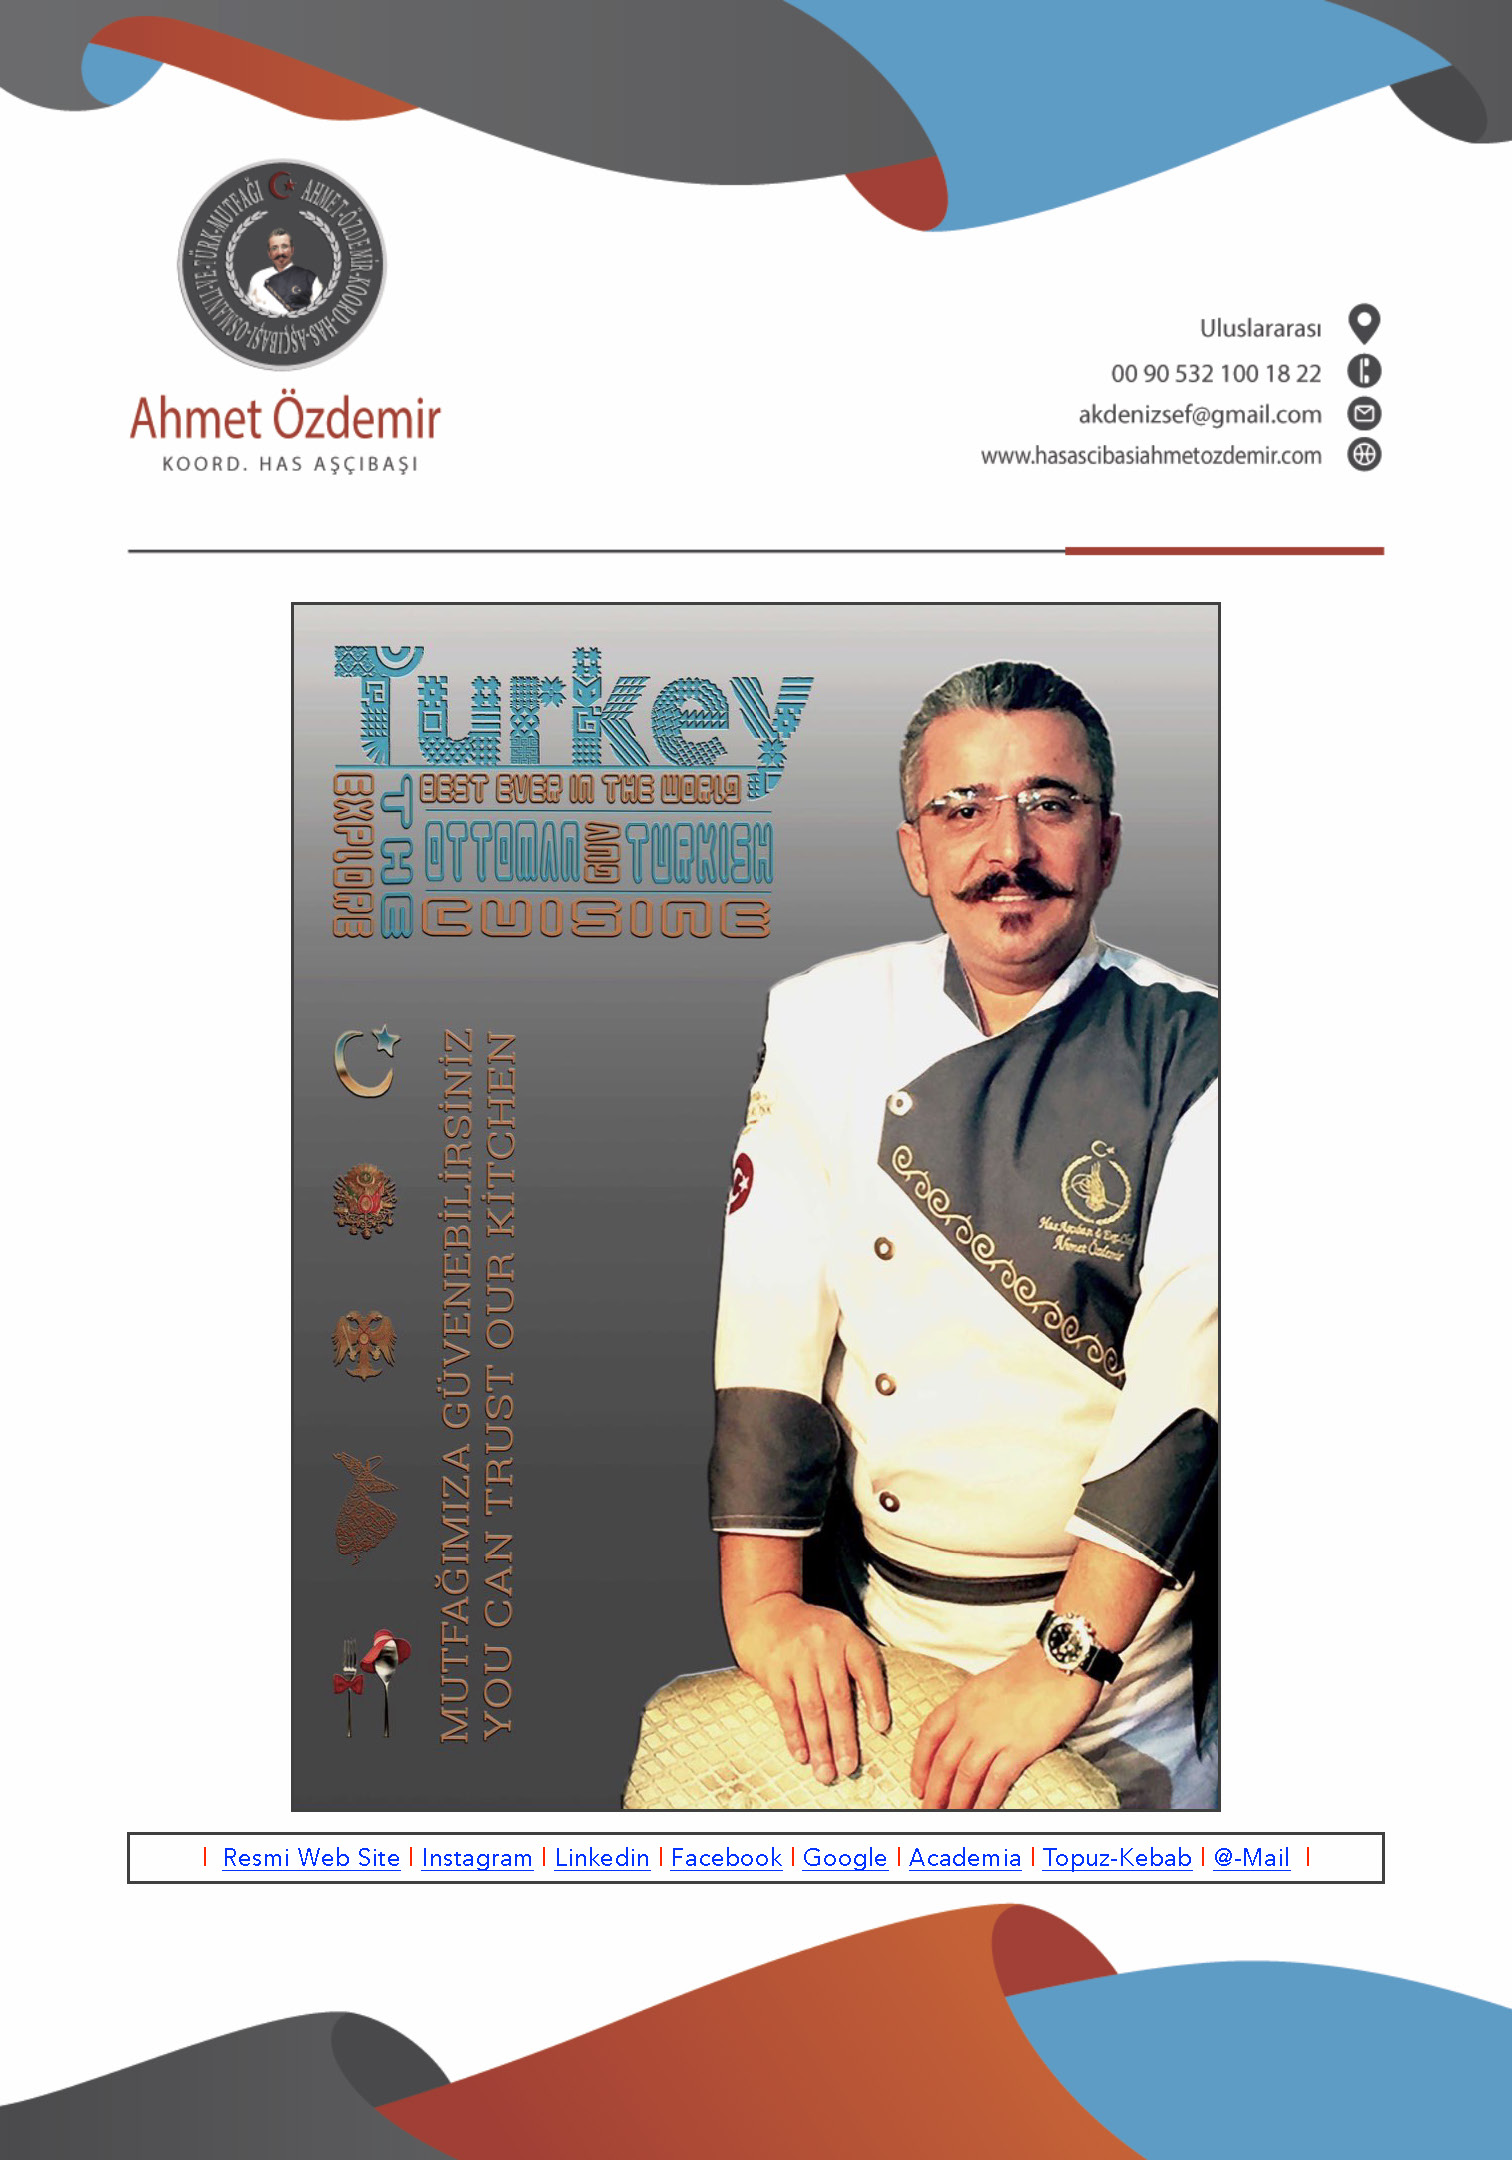 osmanli ve turk mutfagi_danismanlik_has_ascibasi_ahmet_ozdemir_Turk_sefi